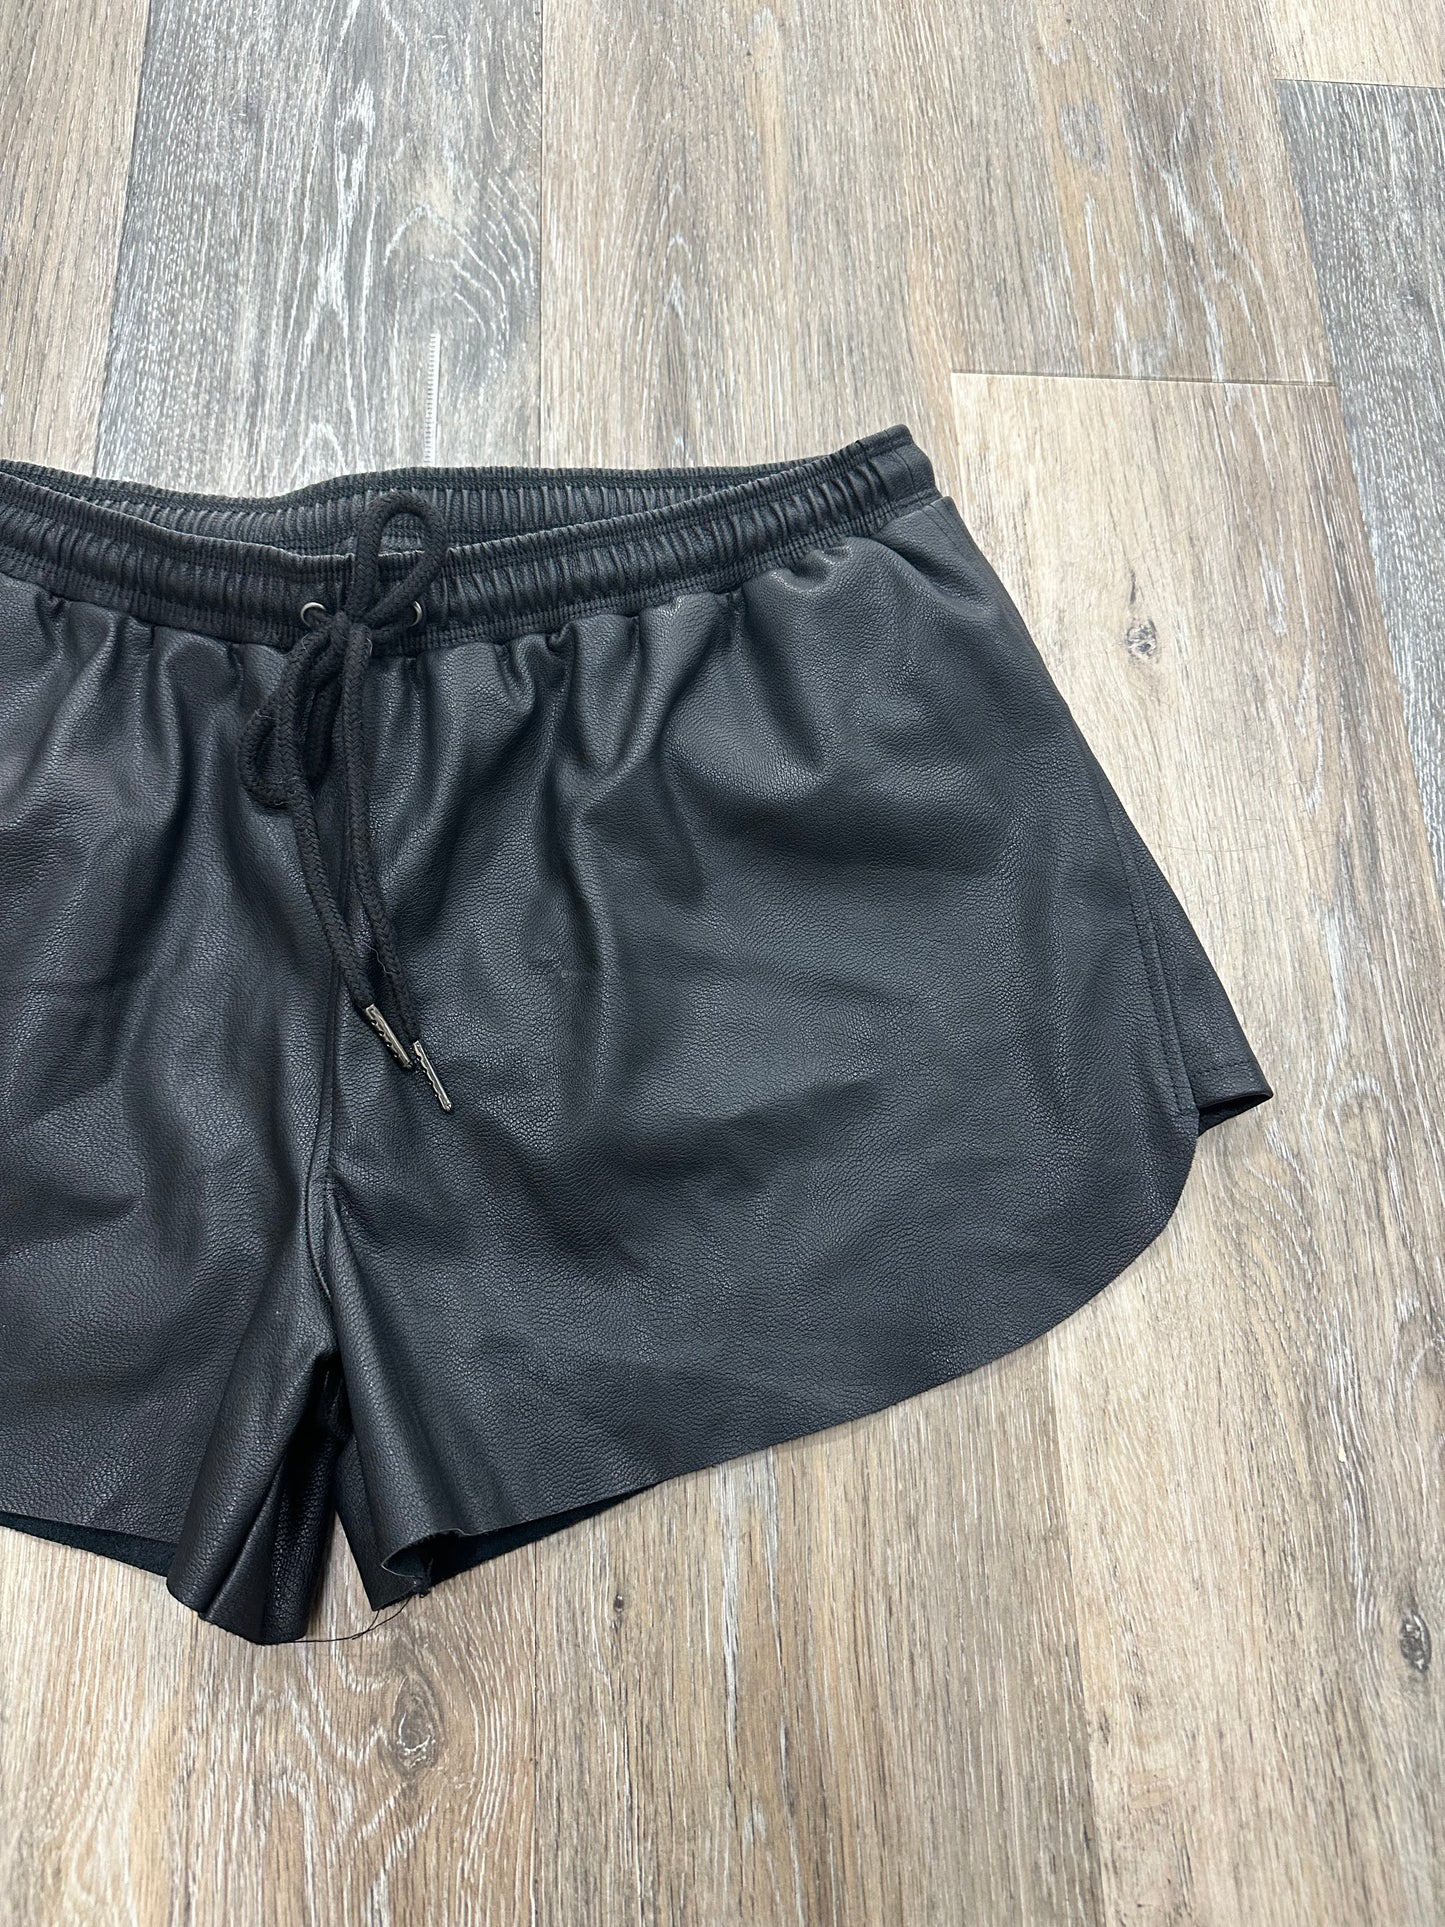 Shorts By David Lerner  Size: M